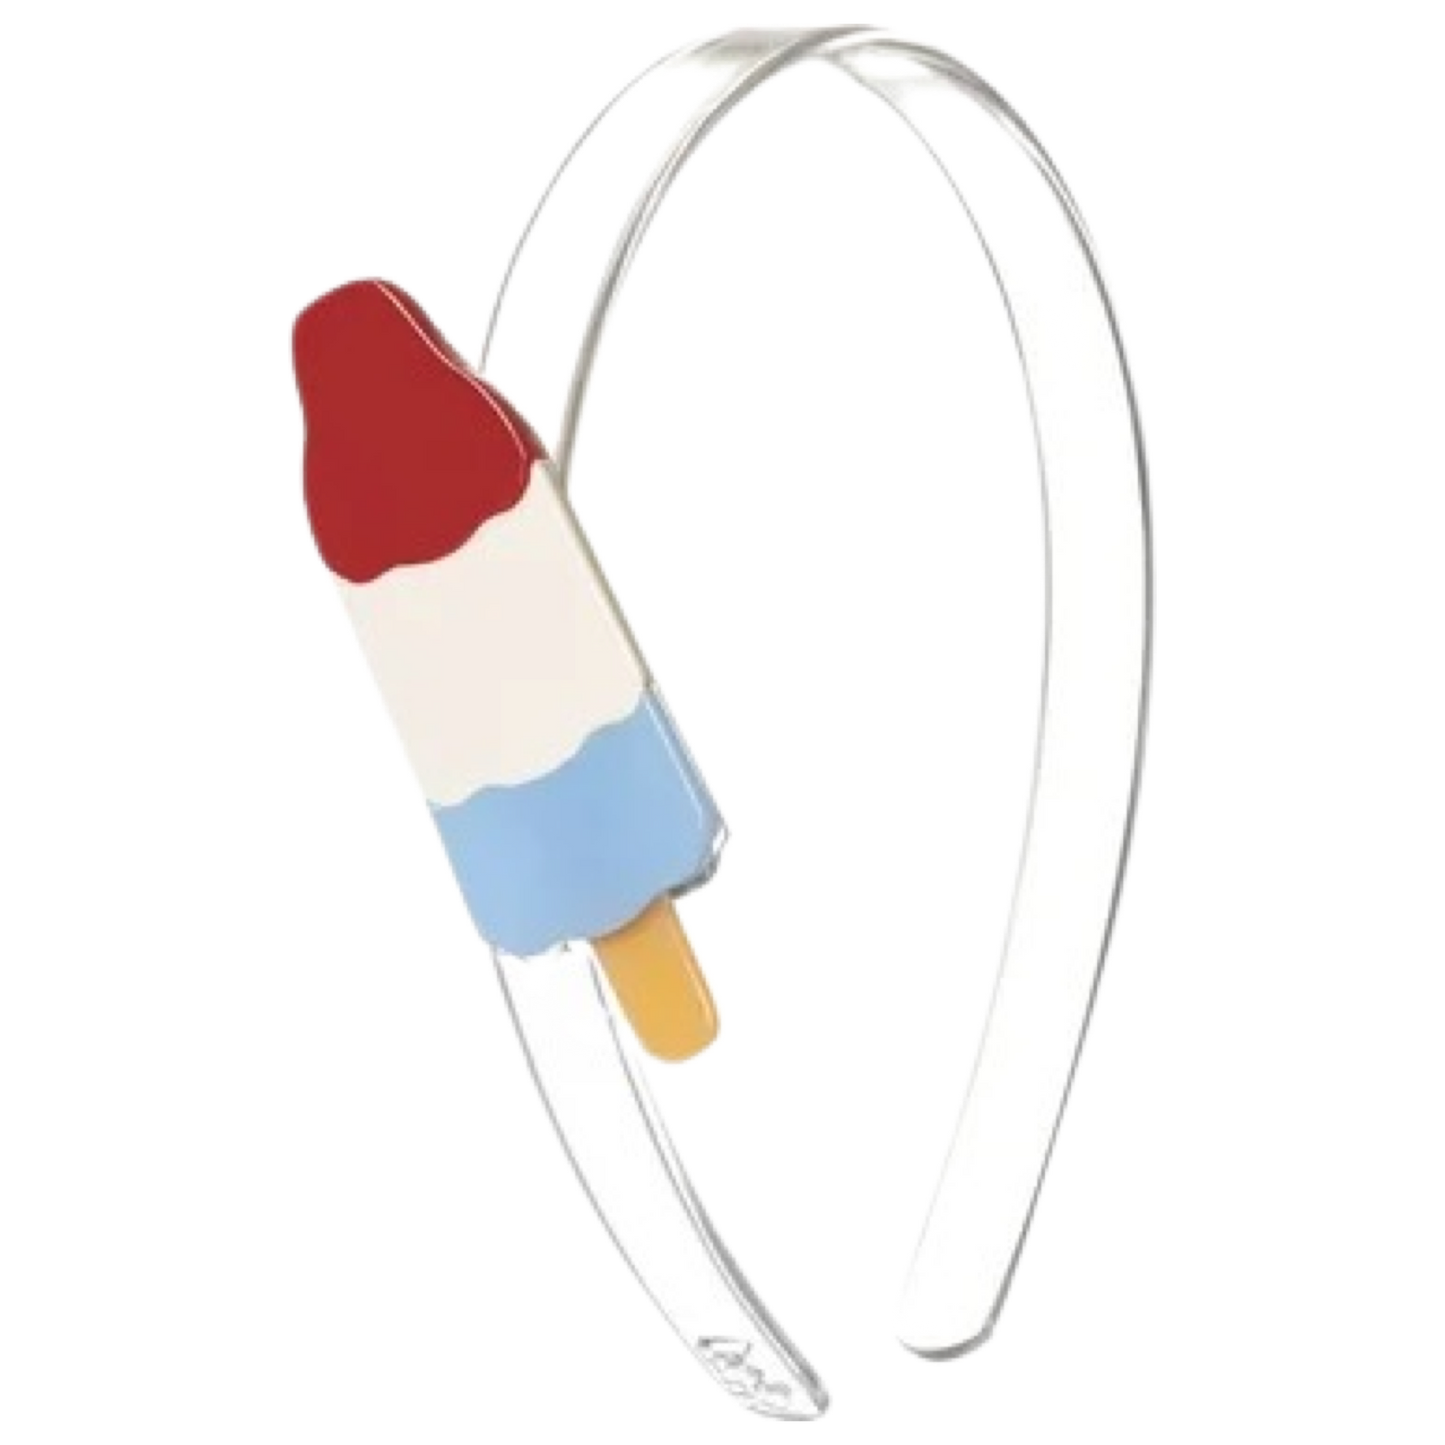 LR Headband - Popsicle